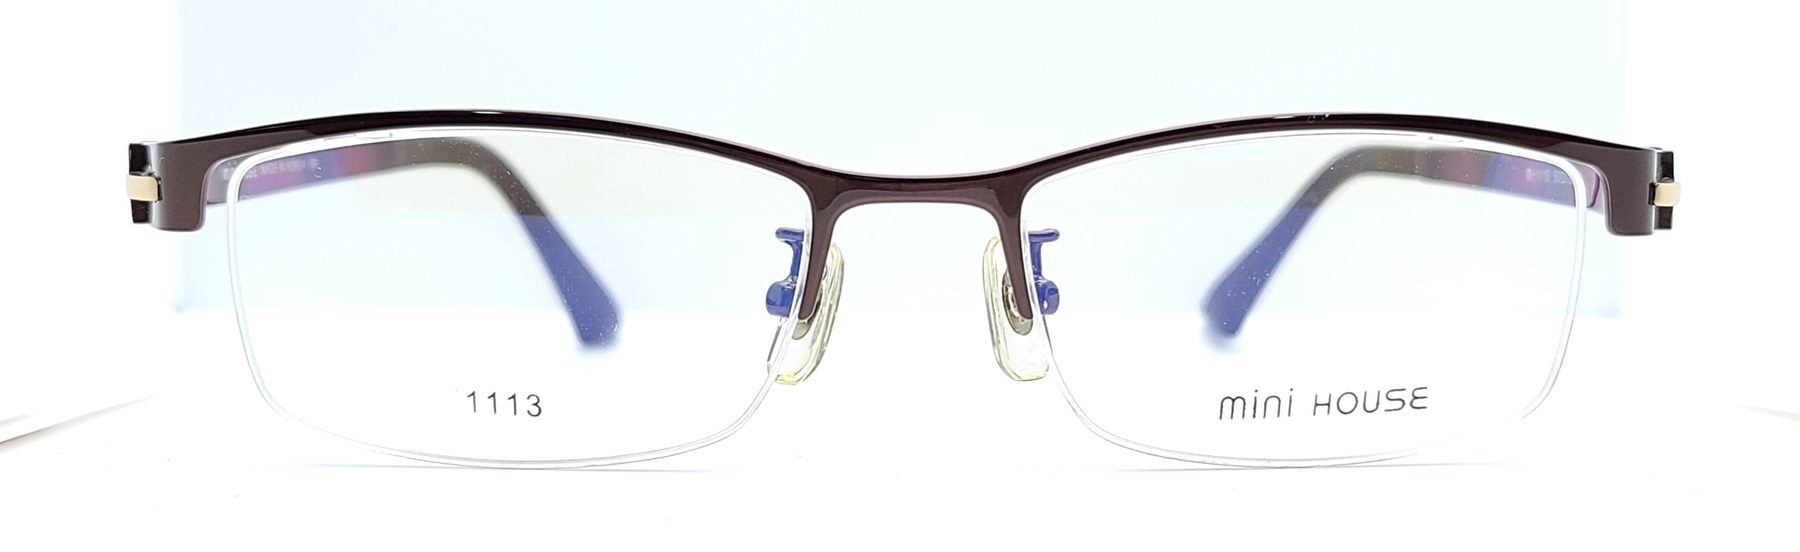 MINIHOUSE M-1113, Korean glasses, sunglasses, eyeglasses, glasses